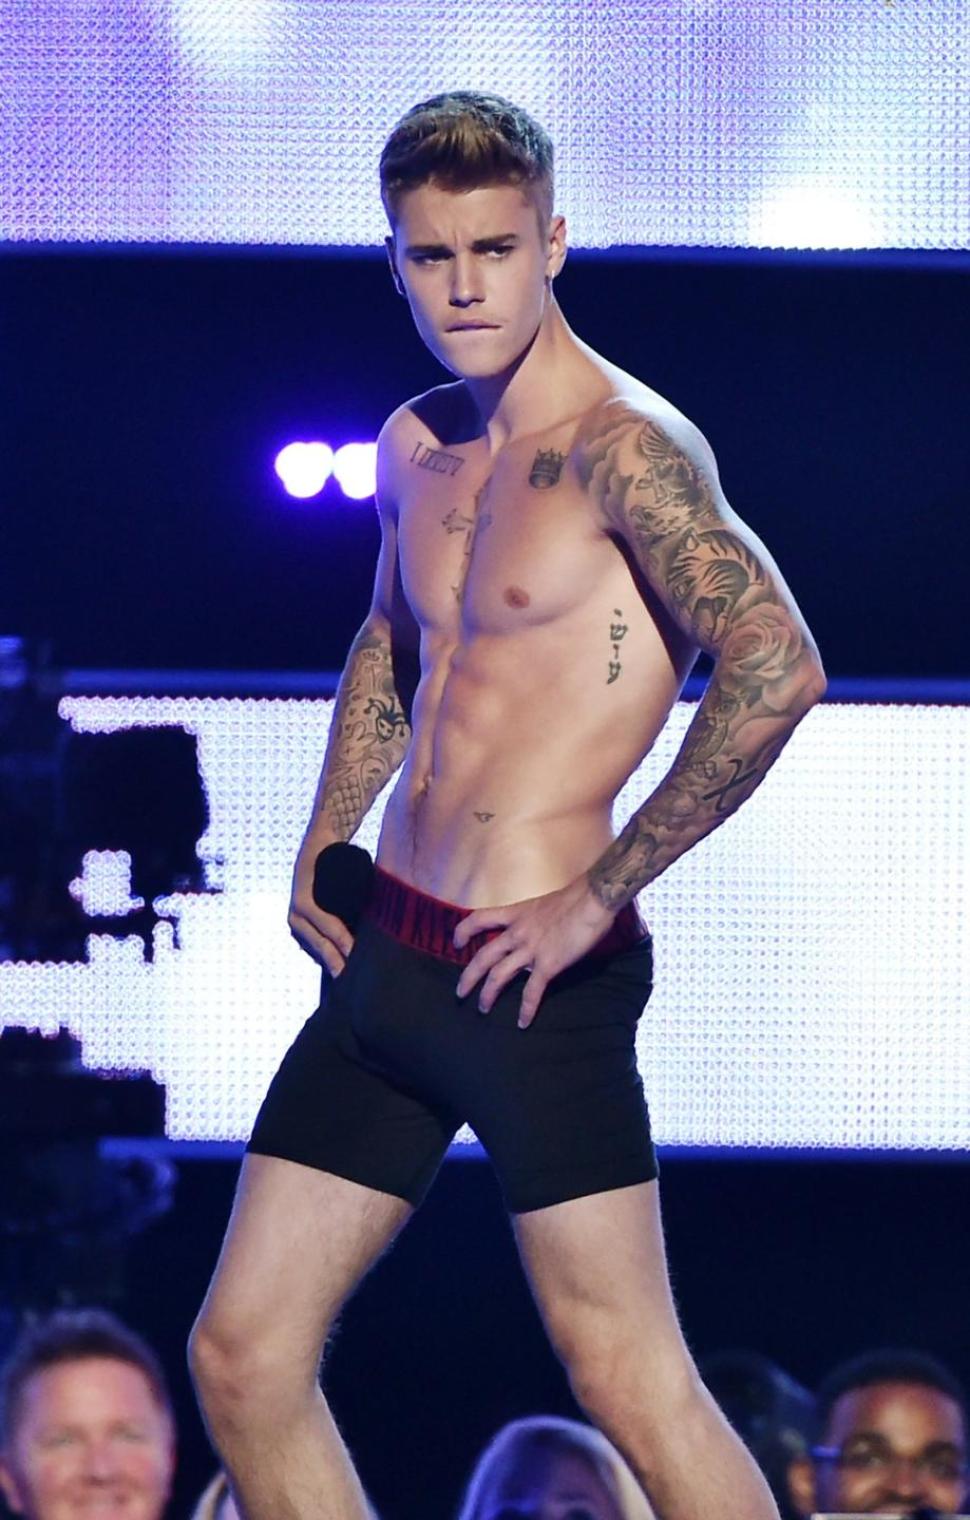 Singer-songwriter Justin Bieber presents onstage at Fashion Rocks Sept. 2014